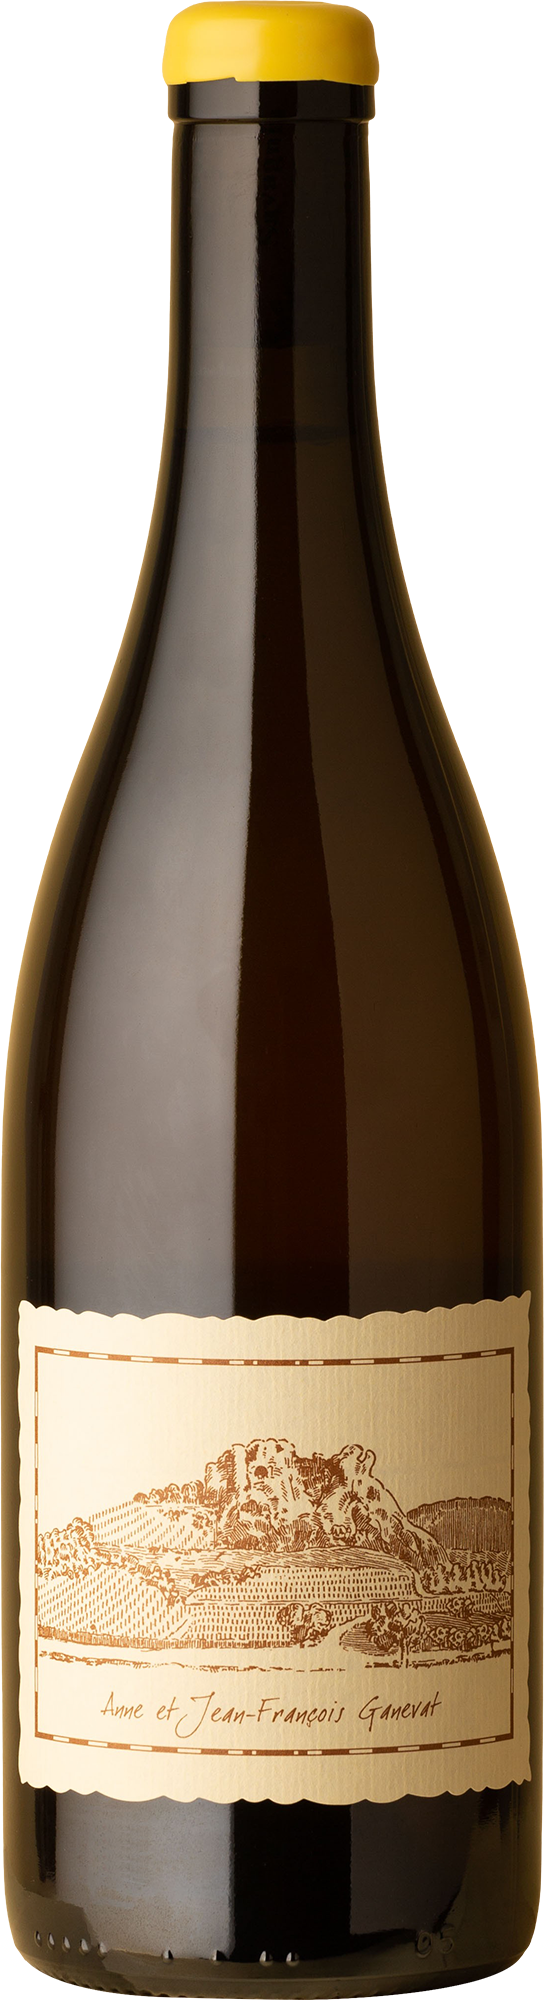 Anne & Jean-François Ganevat - Cotes du Jura Montferrand Chardonnay 2015 White Wine